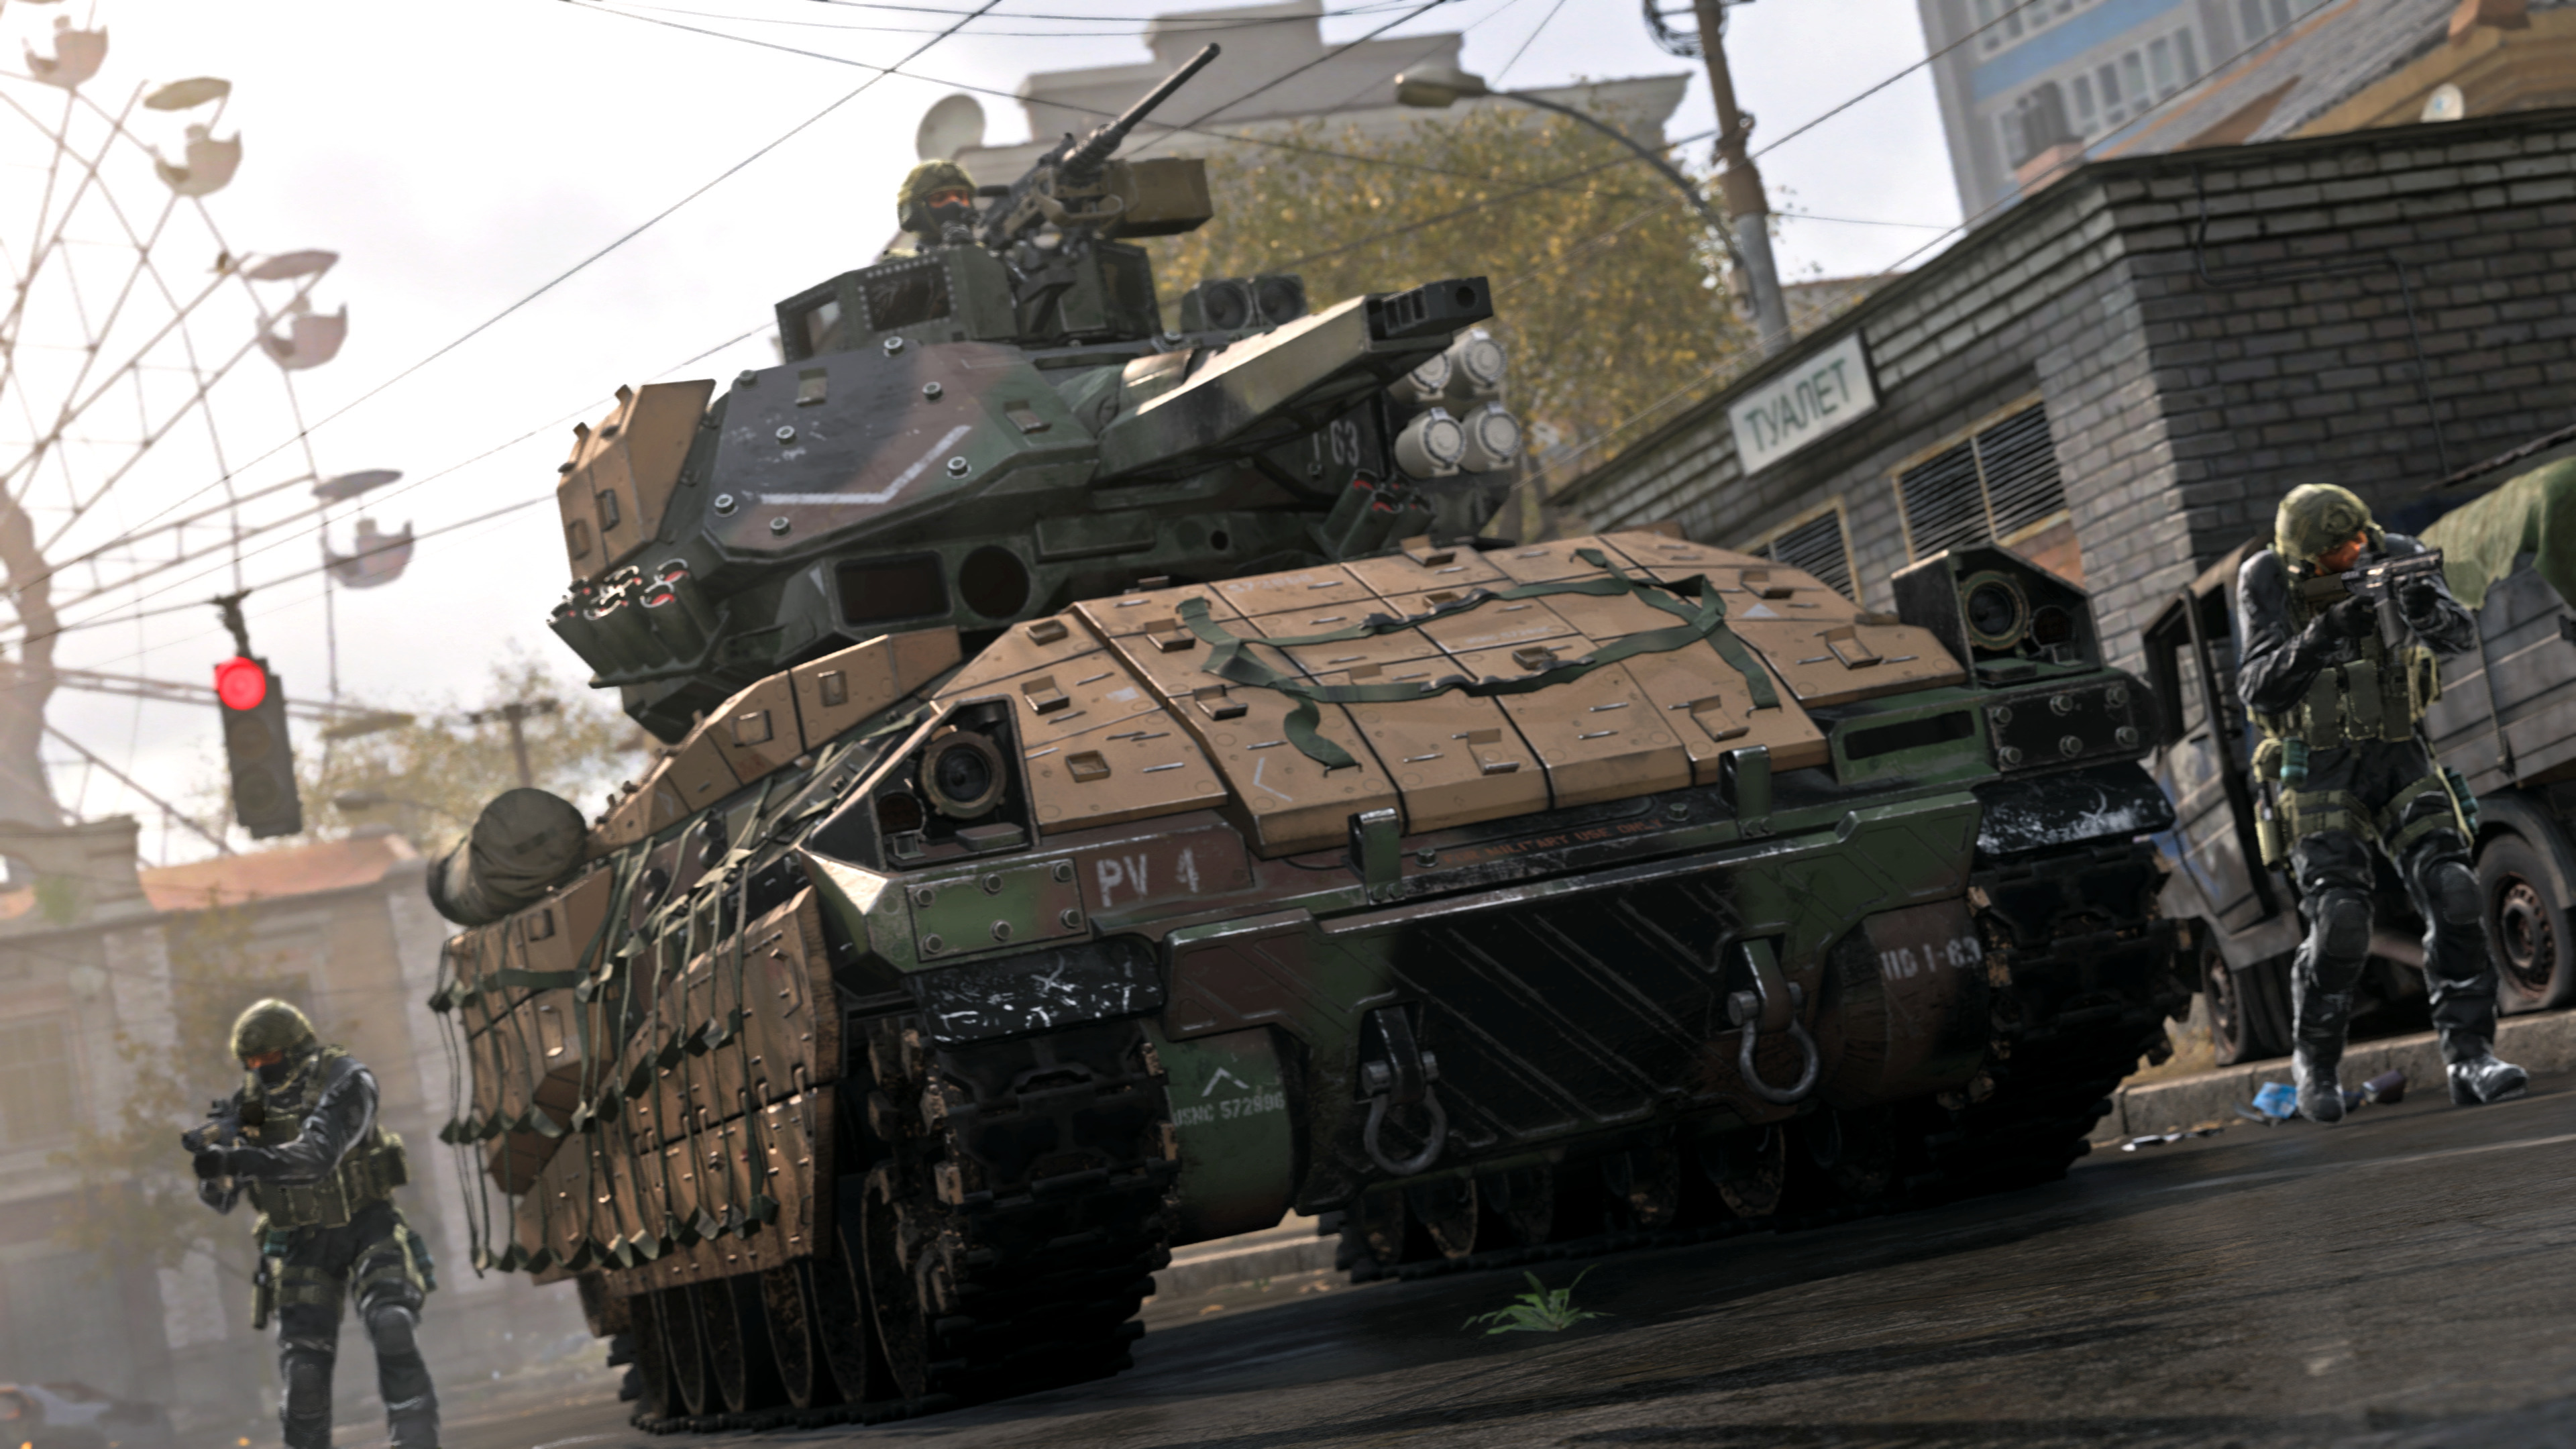 Video Game Call of Duty: Modern Warfare HD Wallpaper | Background Image